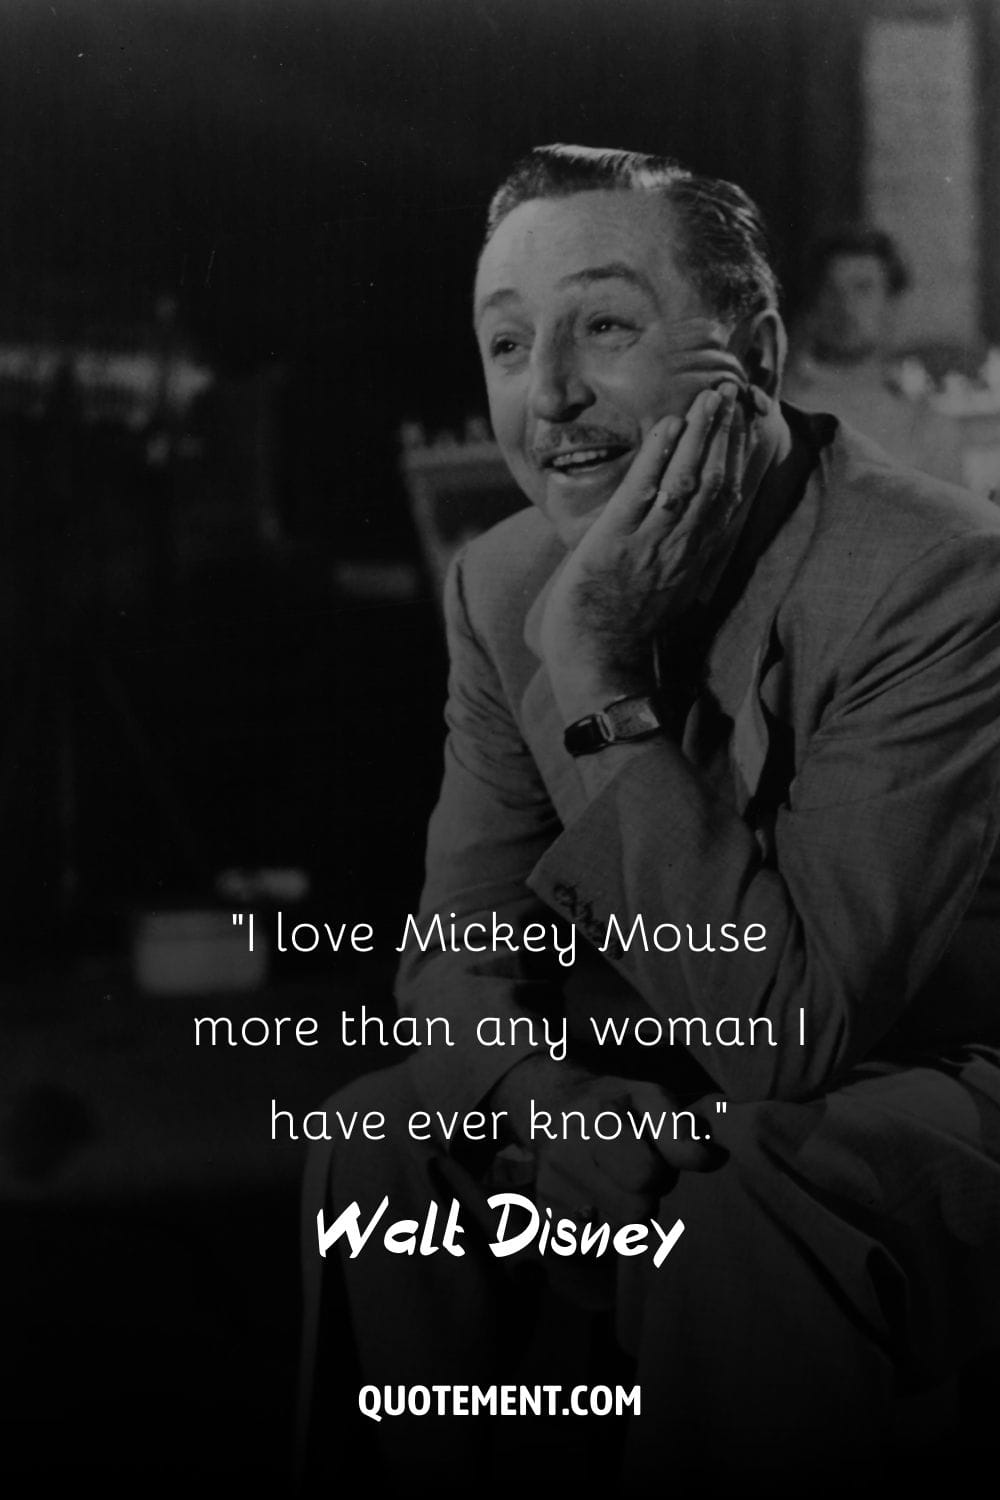 Walt Disney's timeless smile representing Walt Disney love quote.